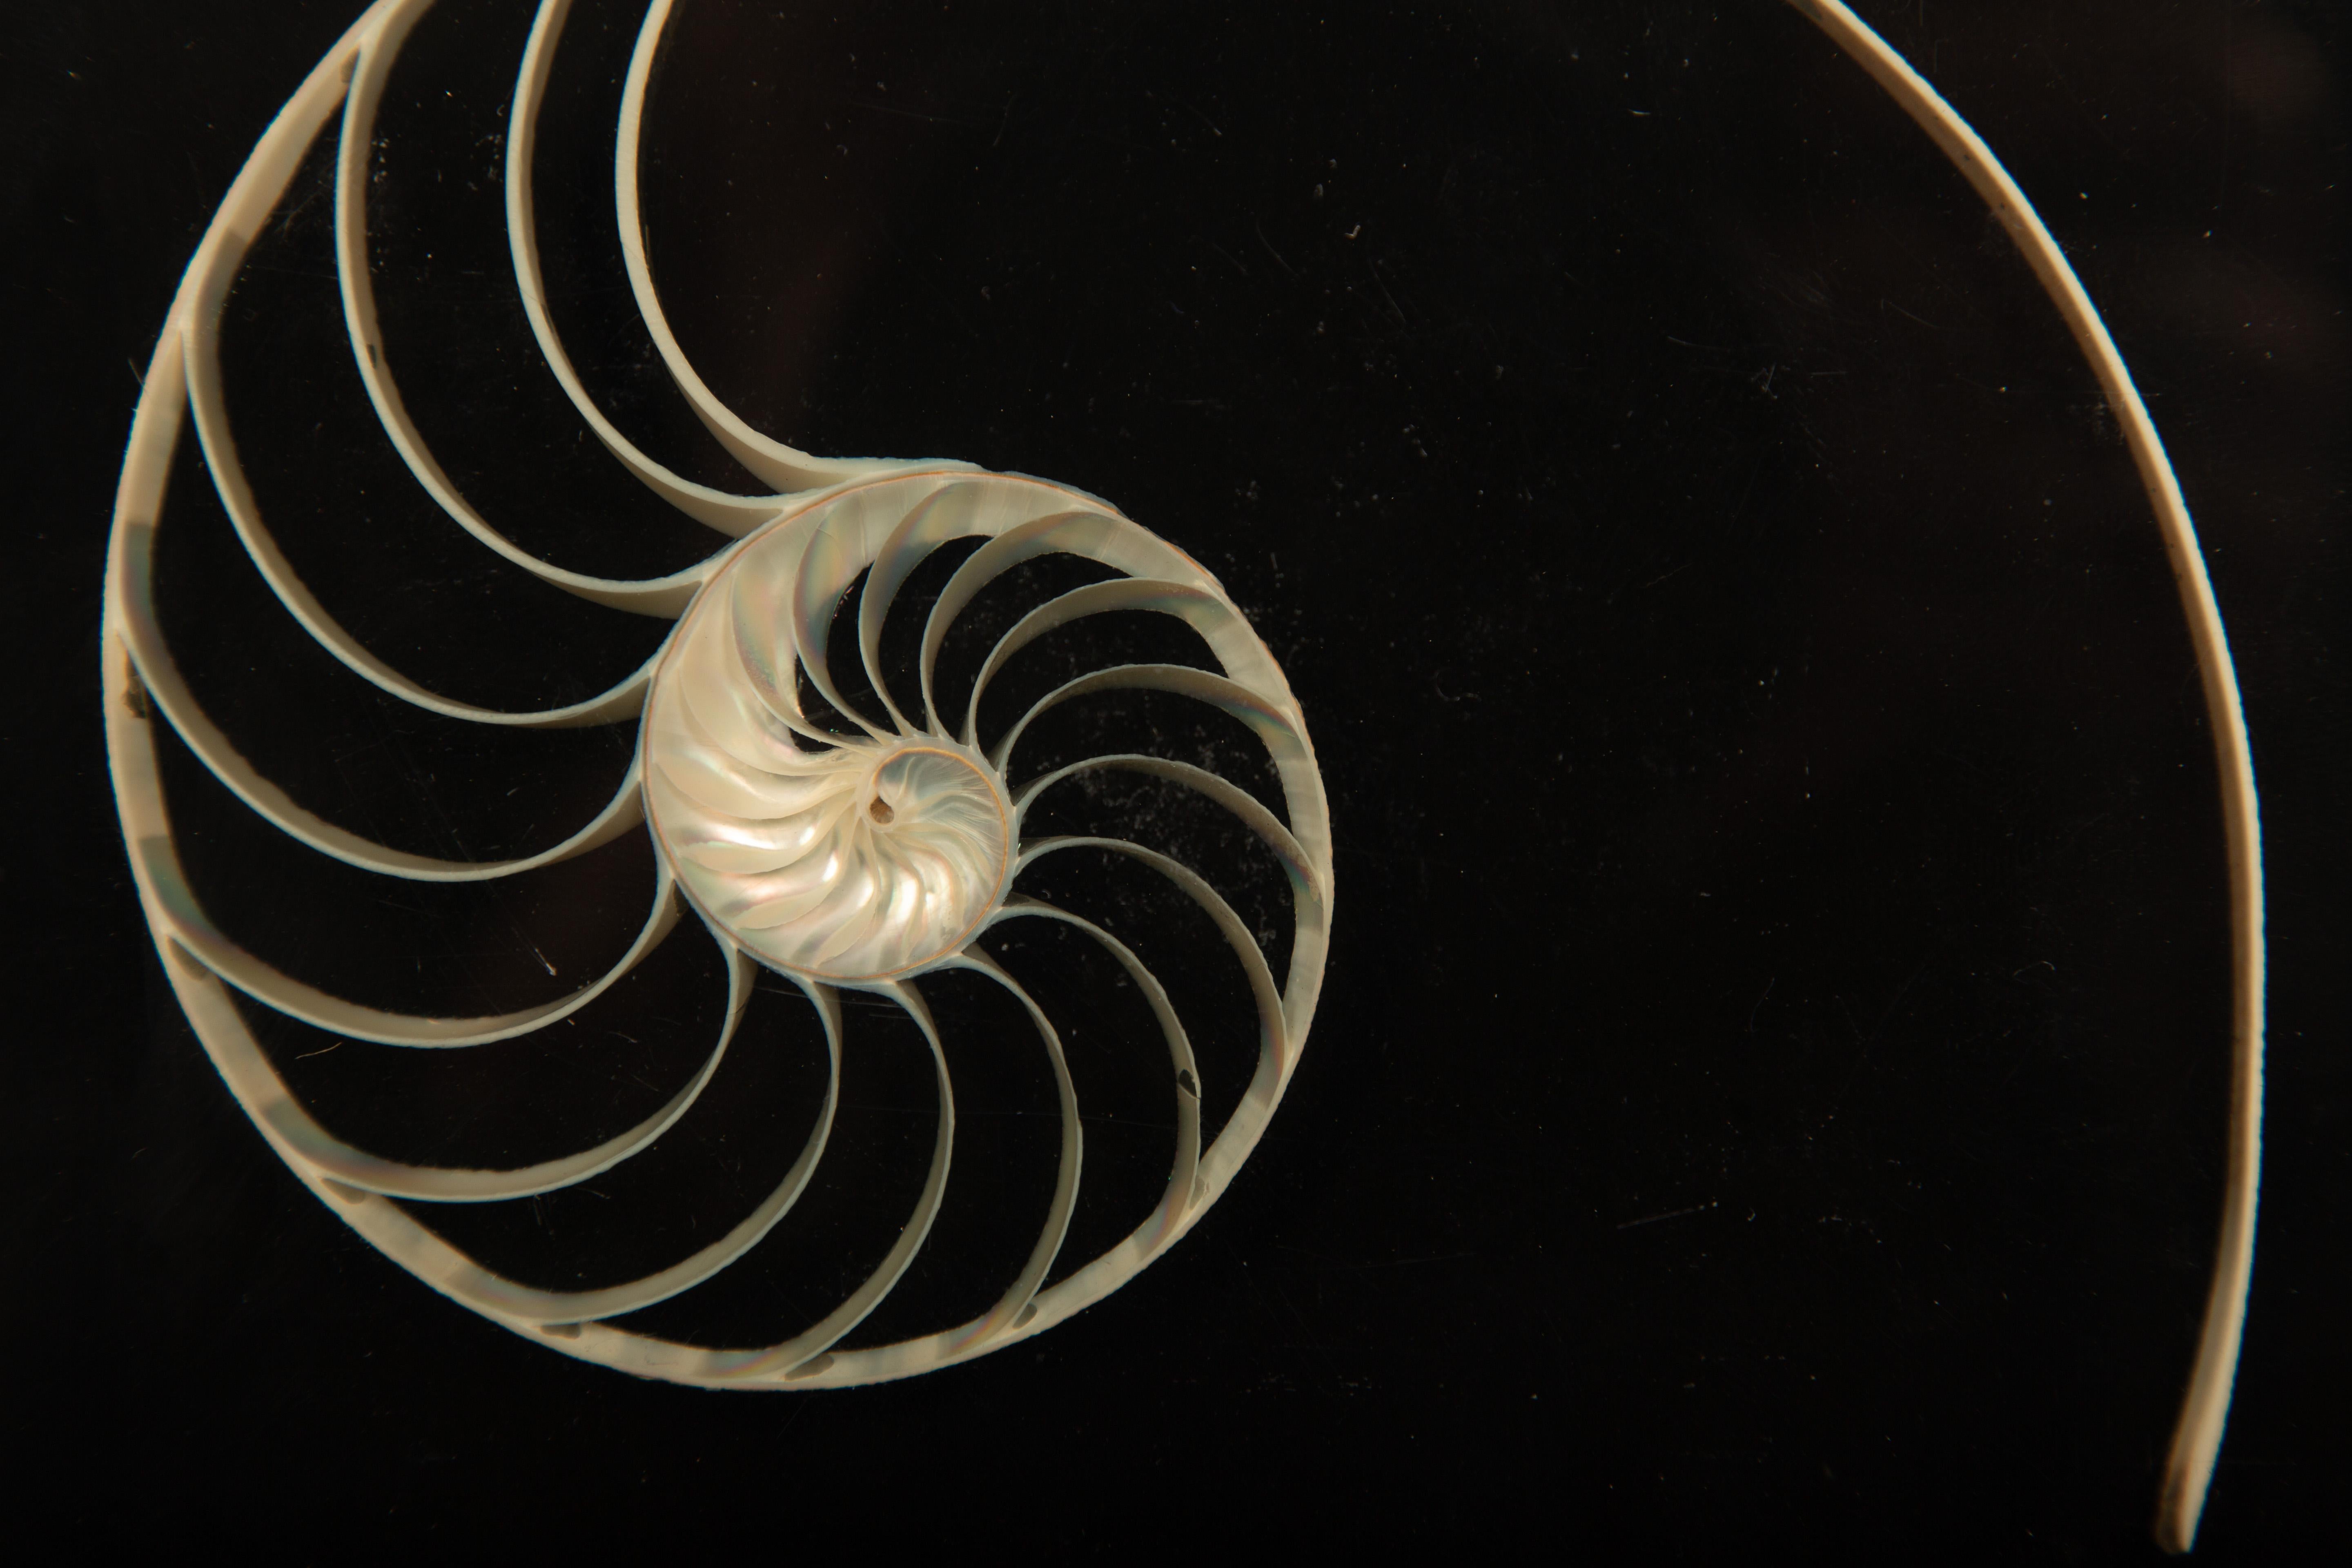 nautilus shell cross section